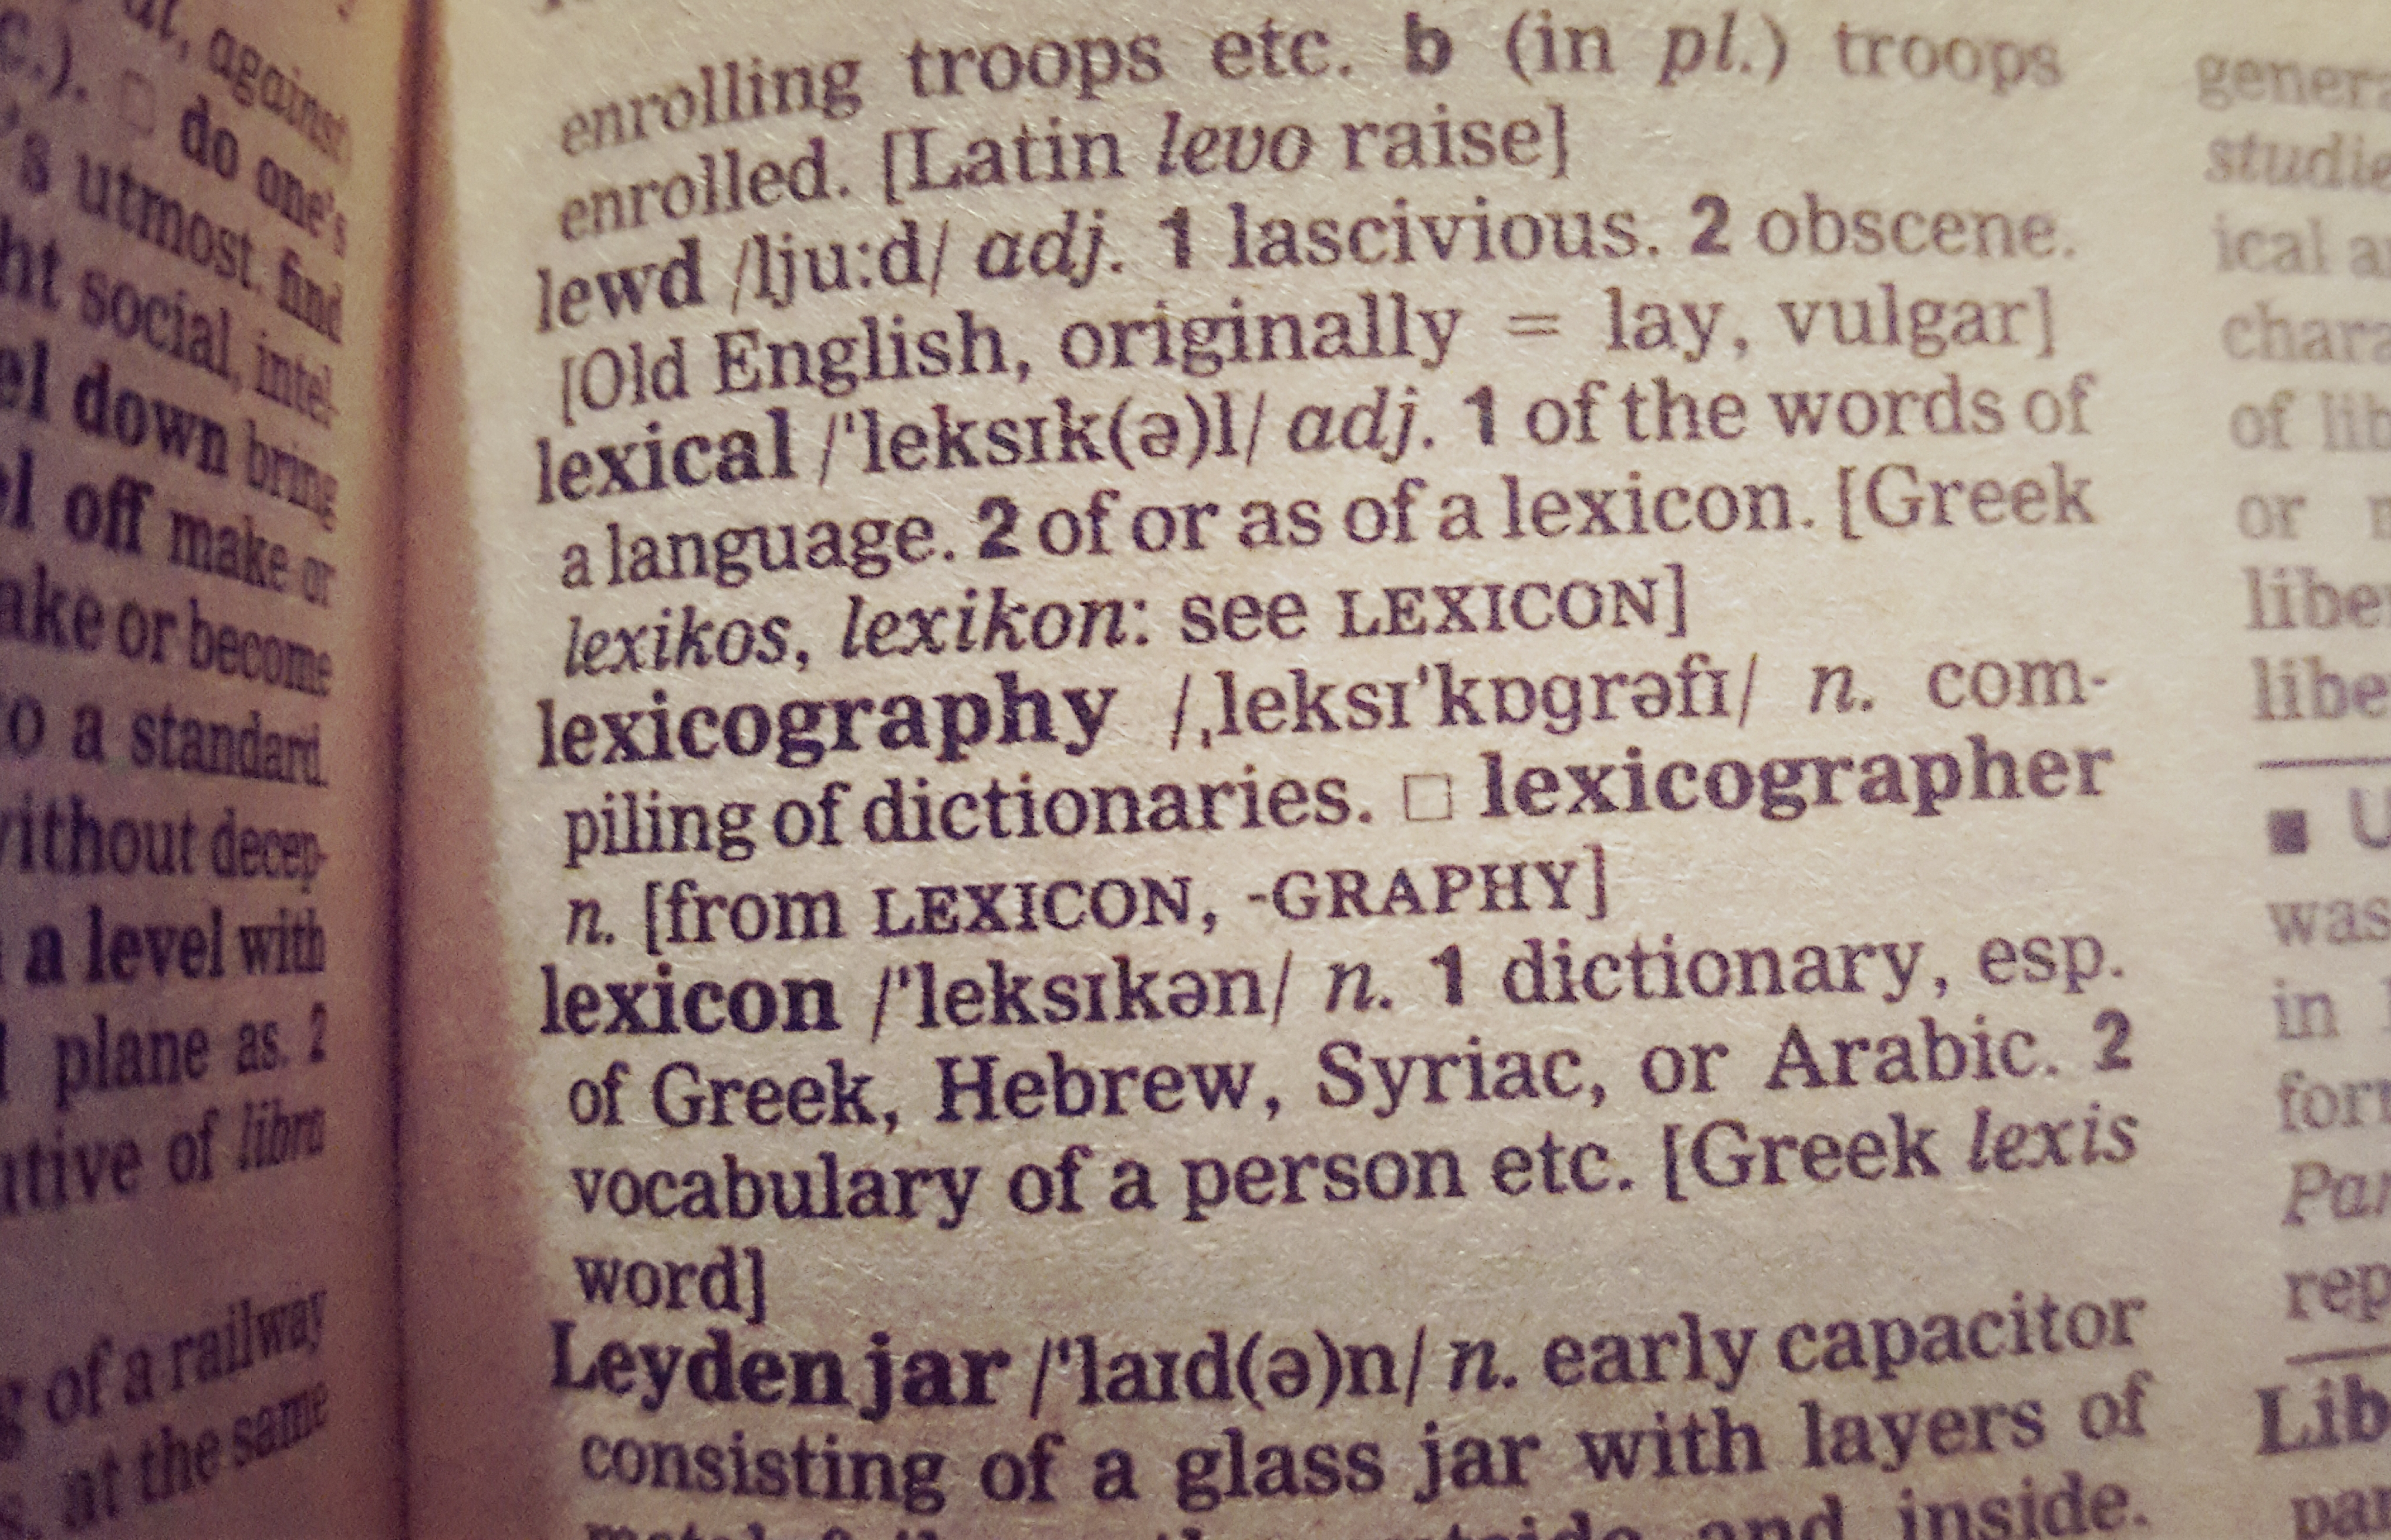 lexicographers